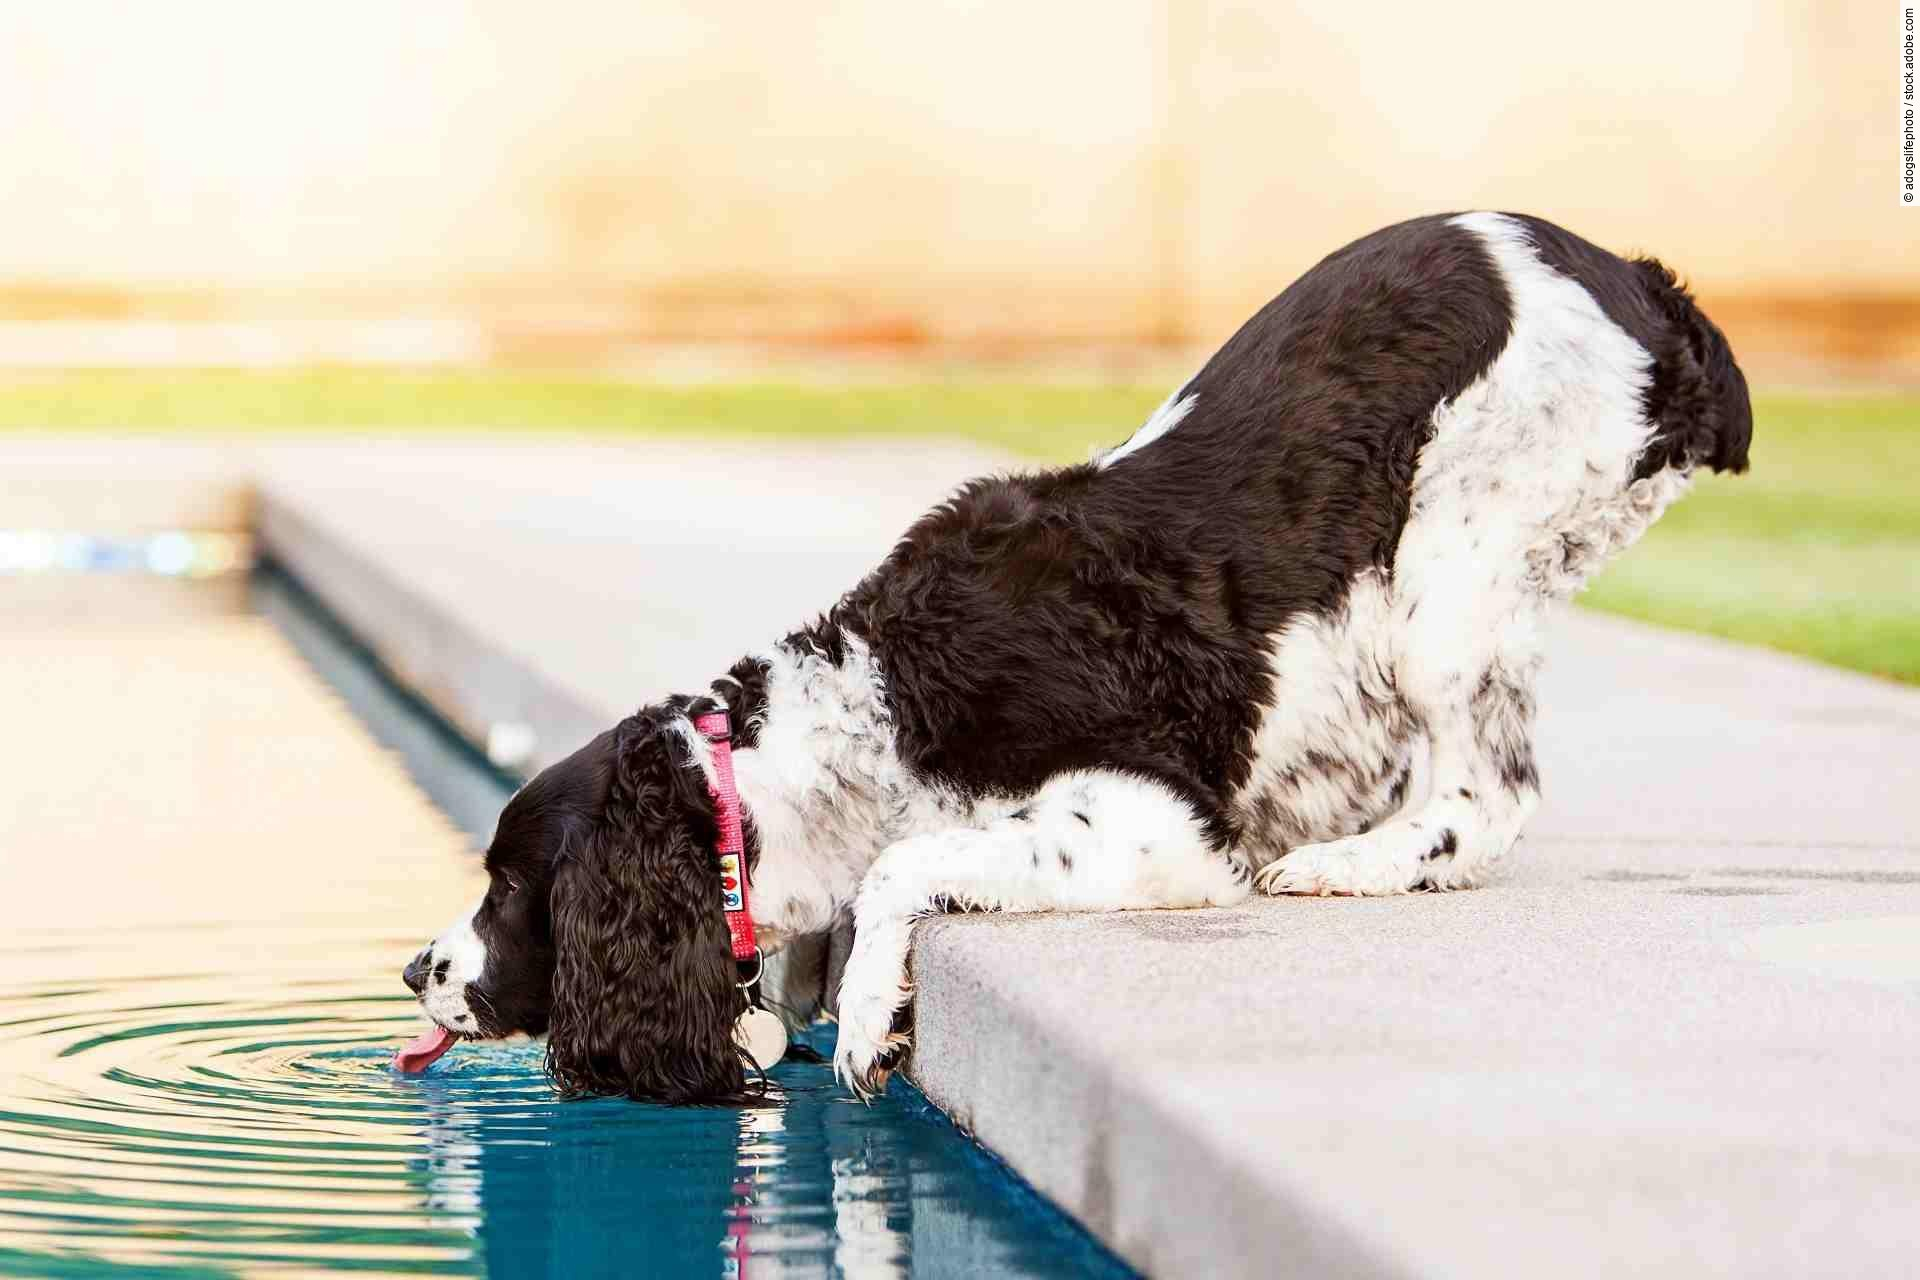 Dog Drinking Pool Water